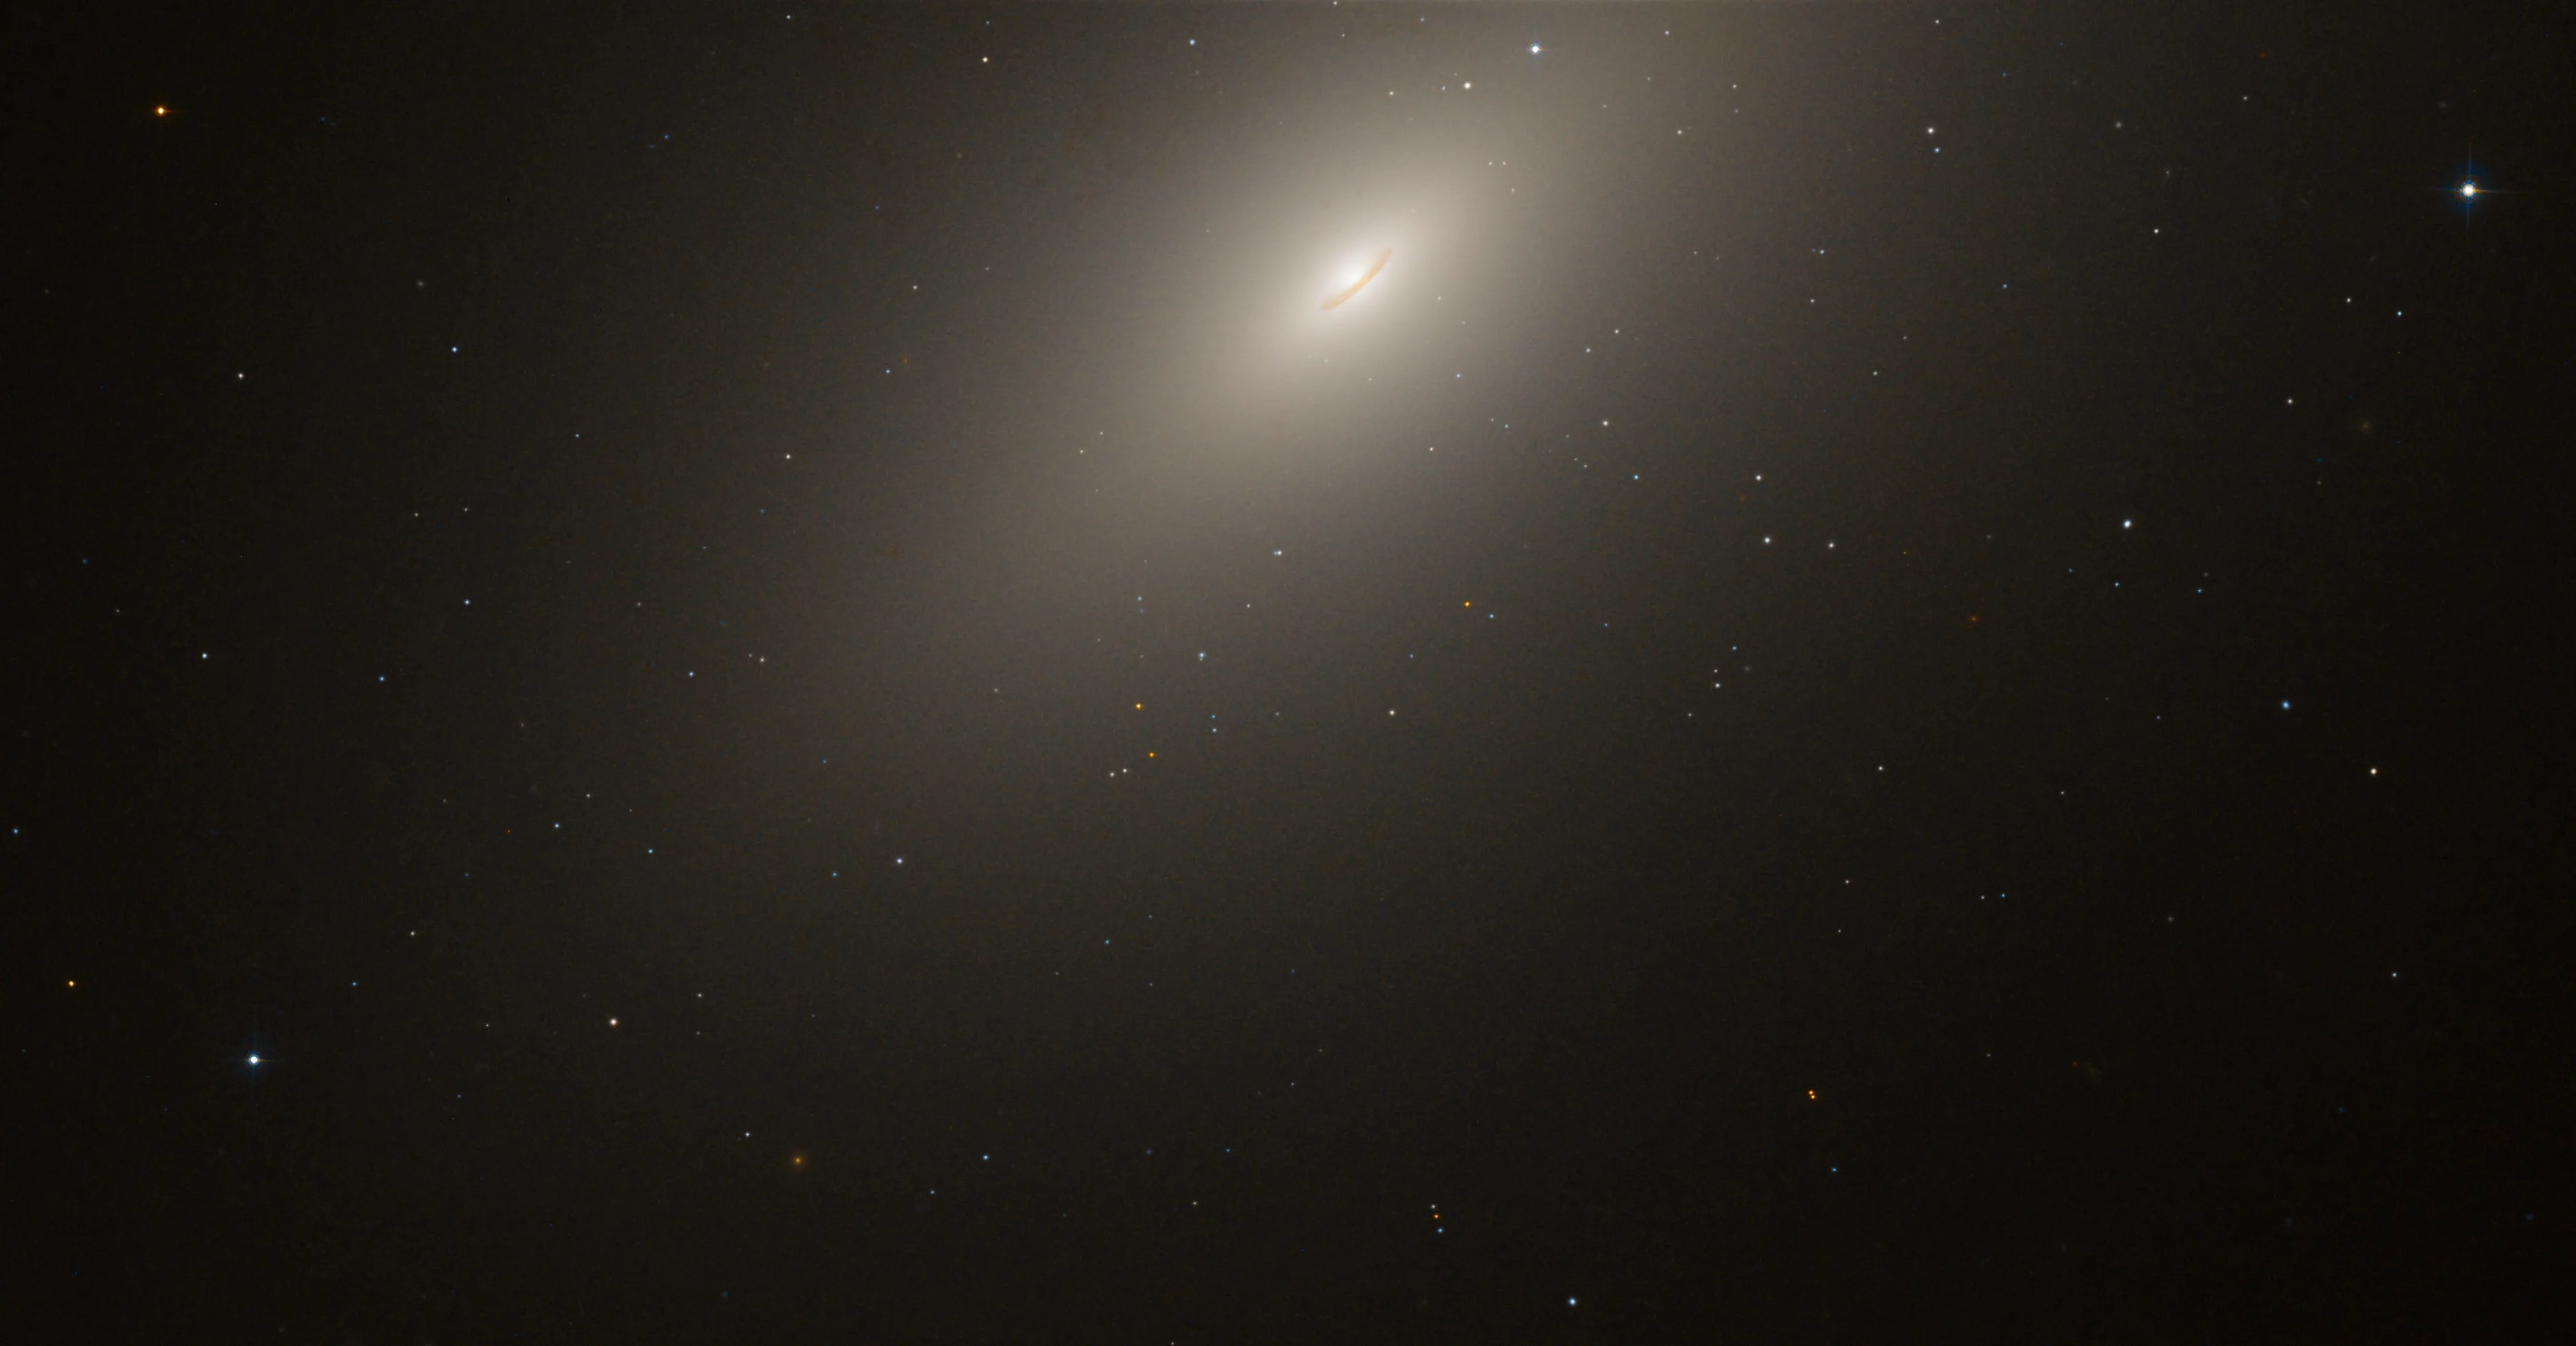 An elliptical galaxy emits a bright white glow that surrounds it like a halo.